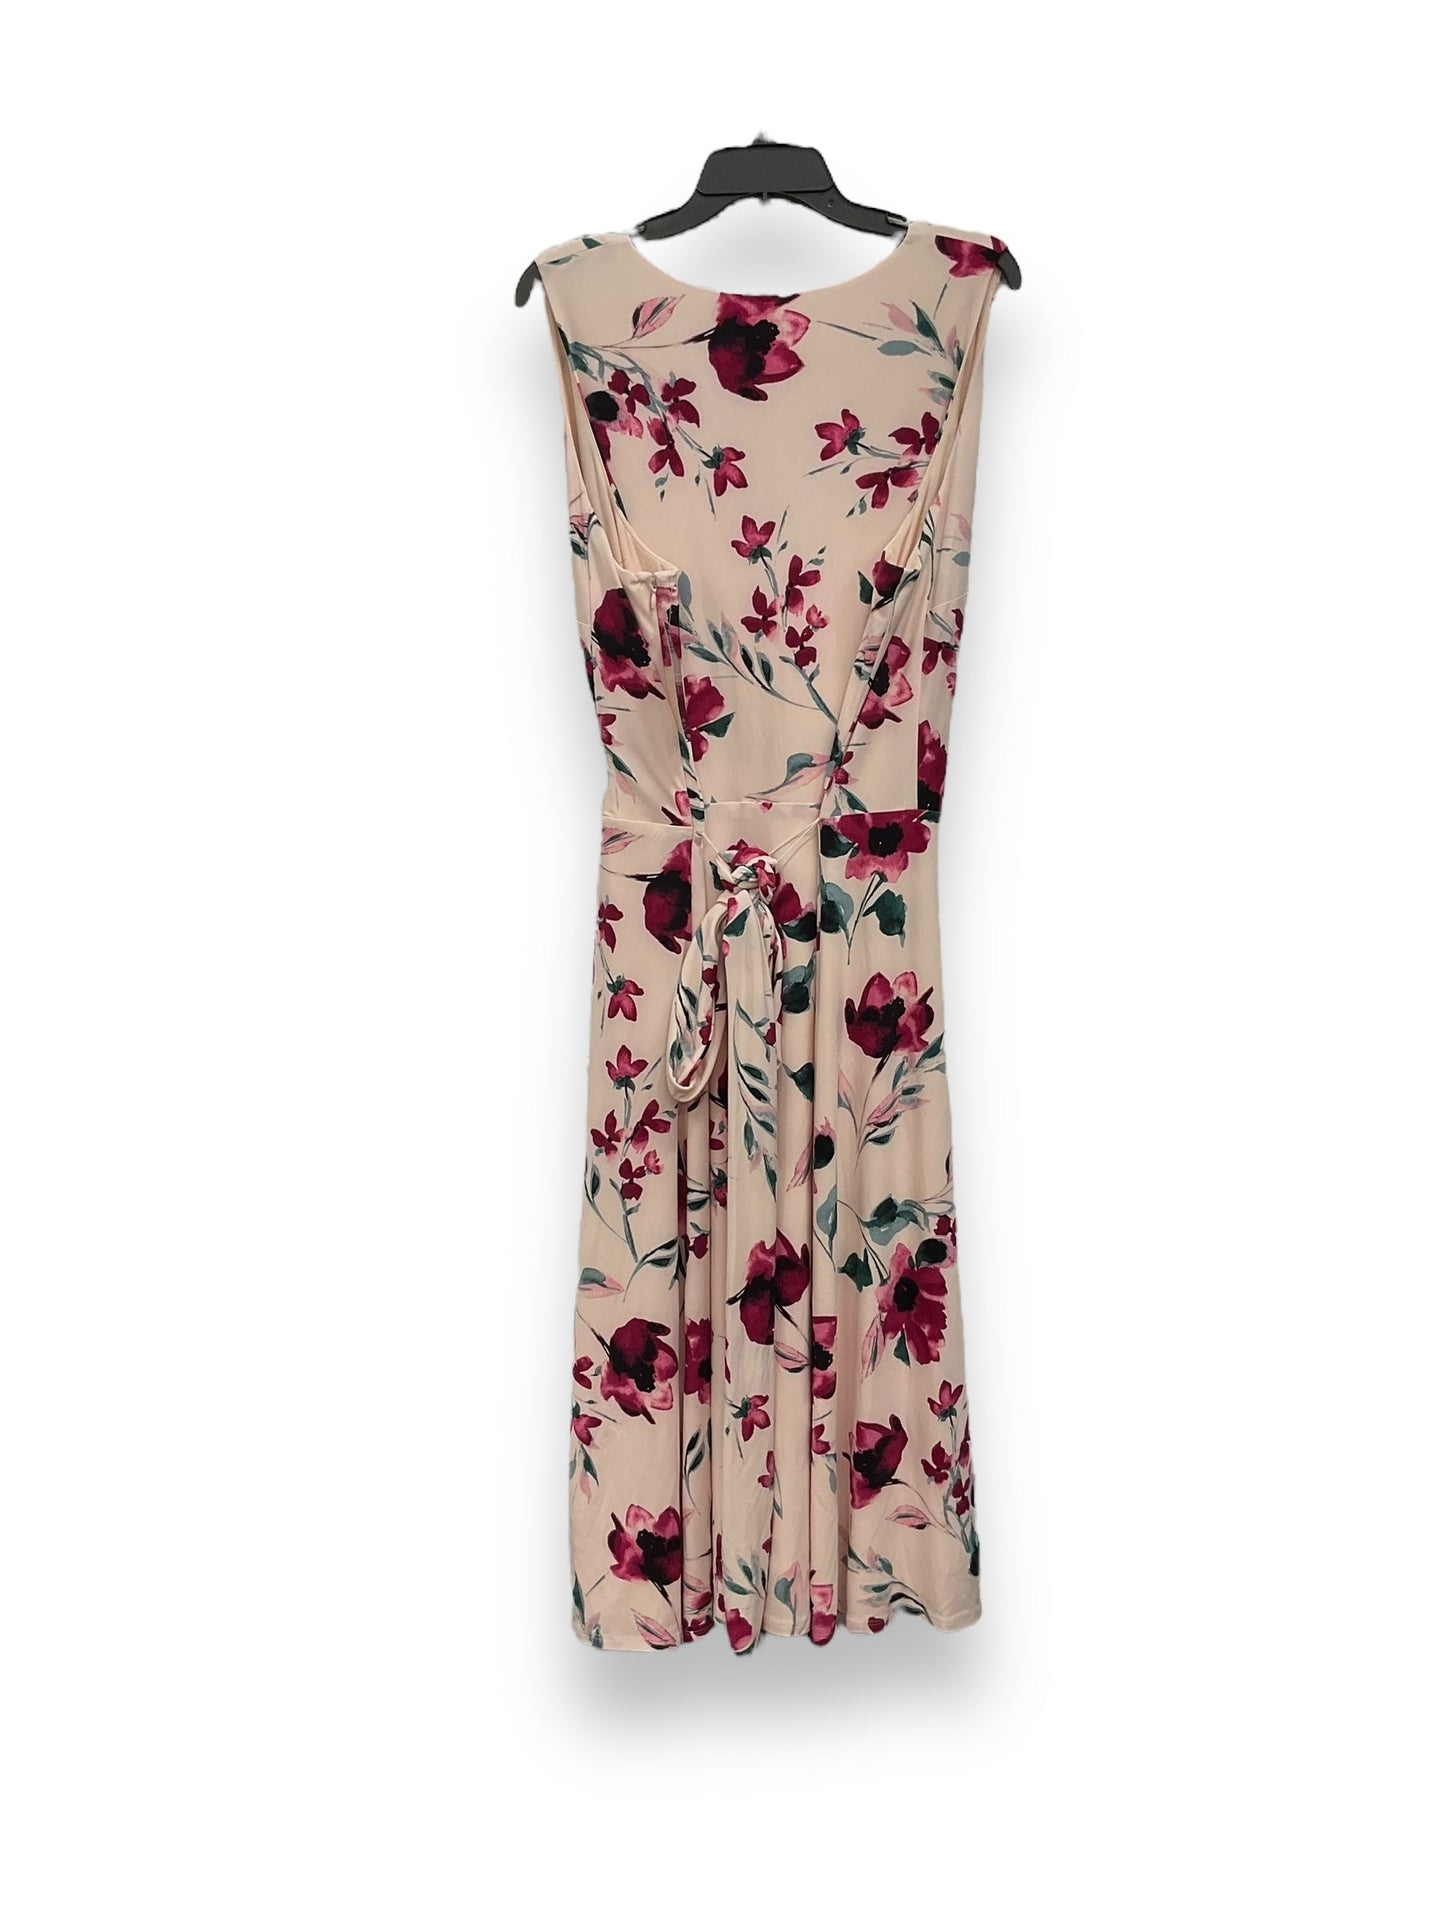 Floral Print Dress Casual Maxi Ralph Lauren, Size 2x